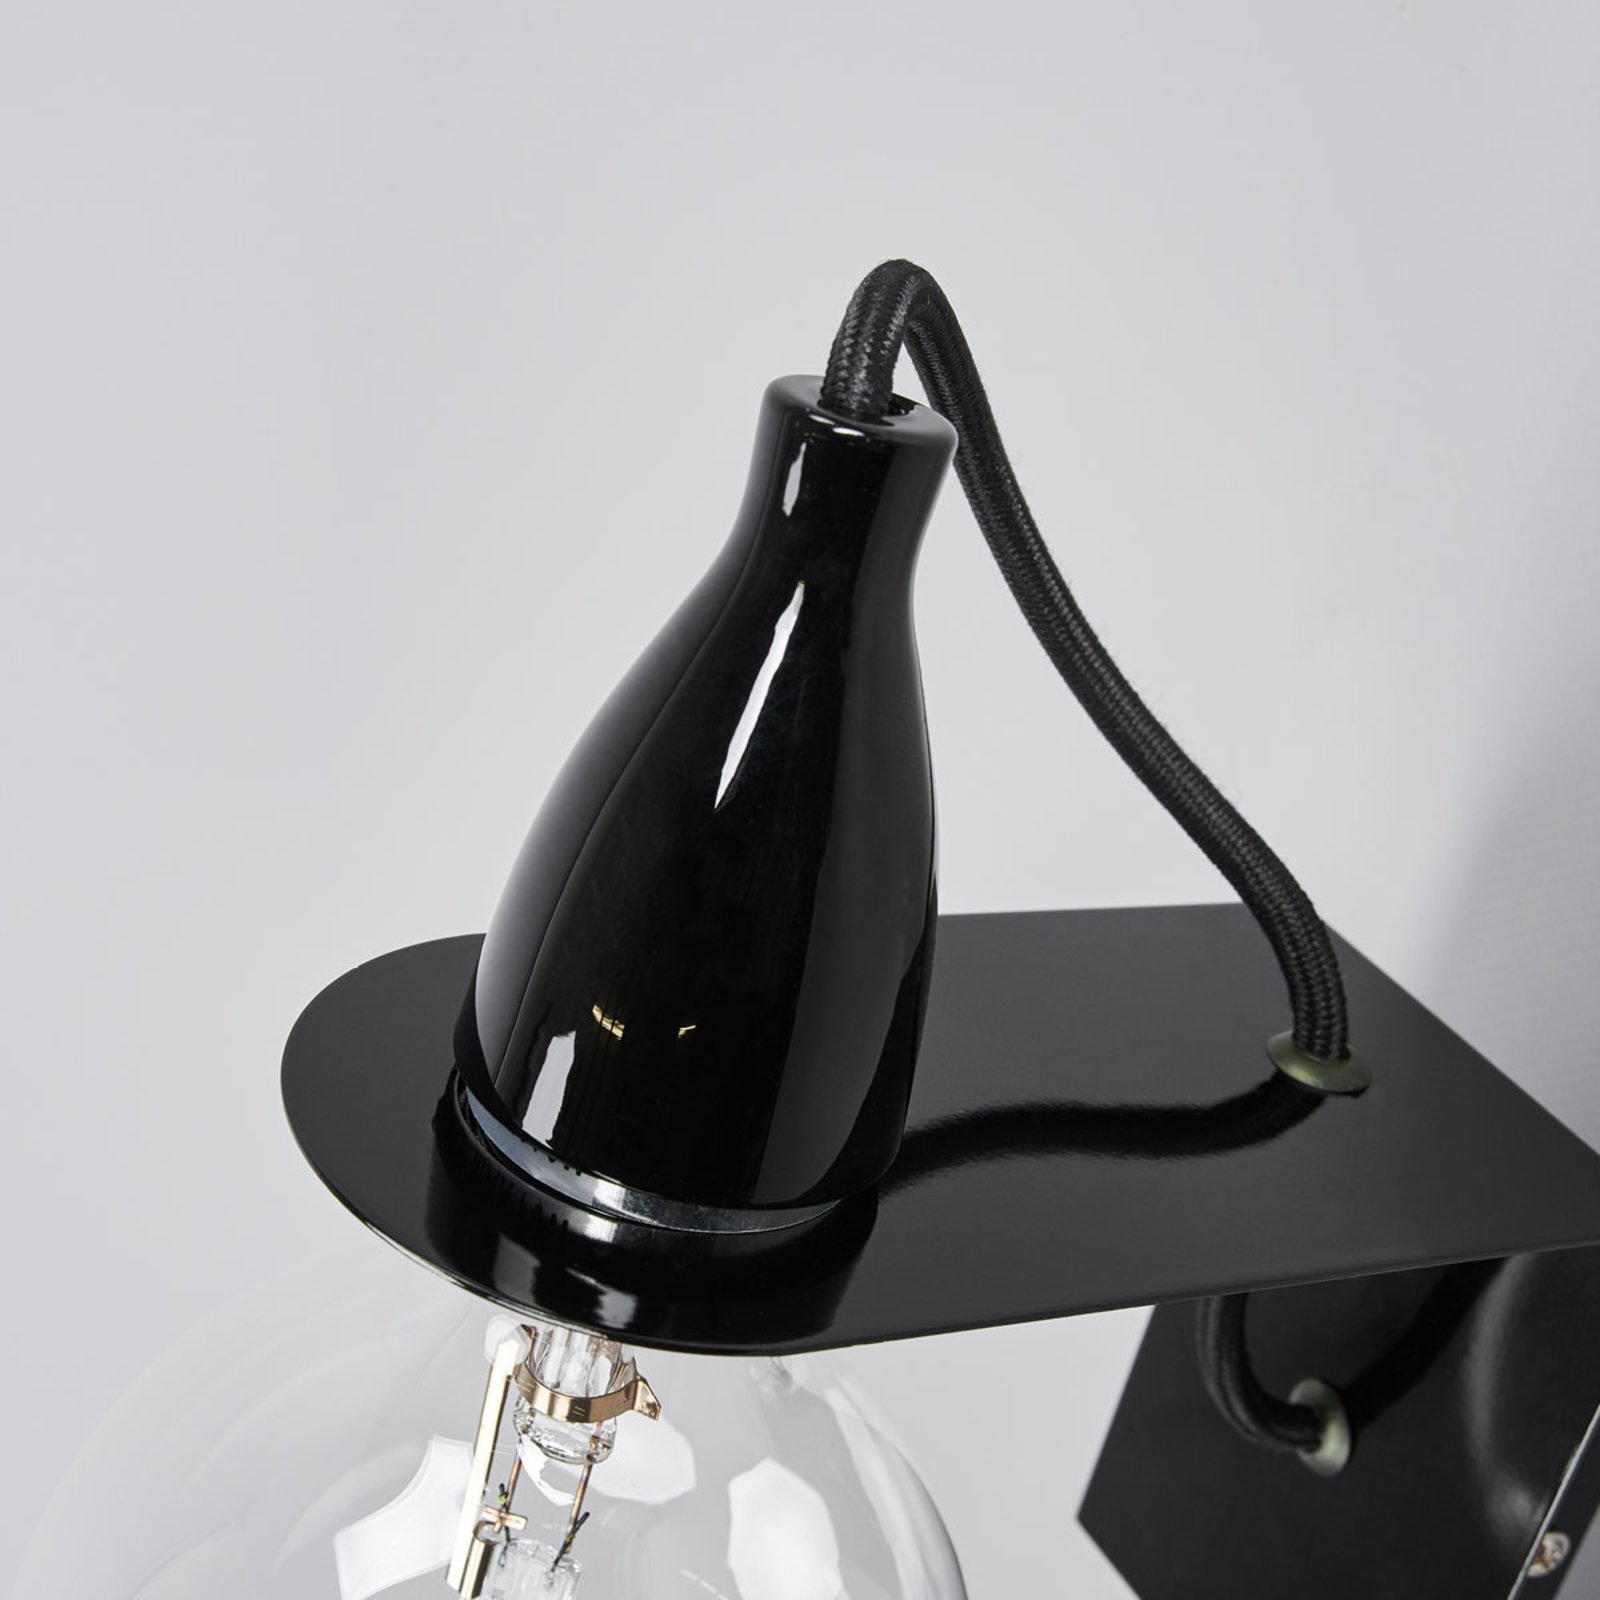 Čierne dizajnérske nástenné svietidlo Minimal